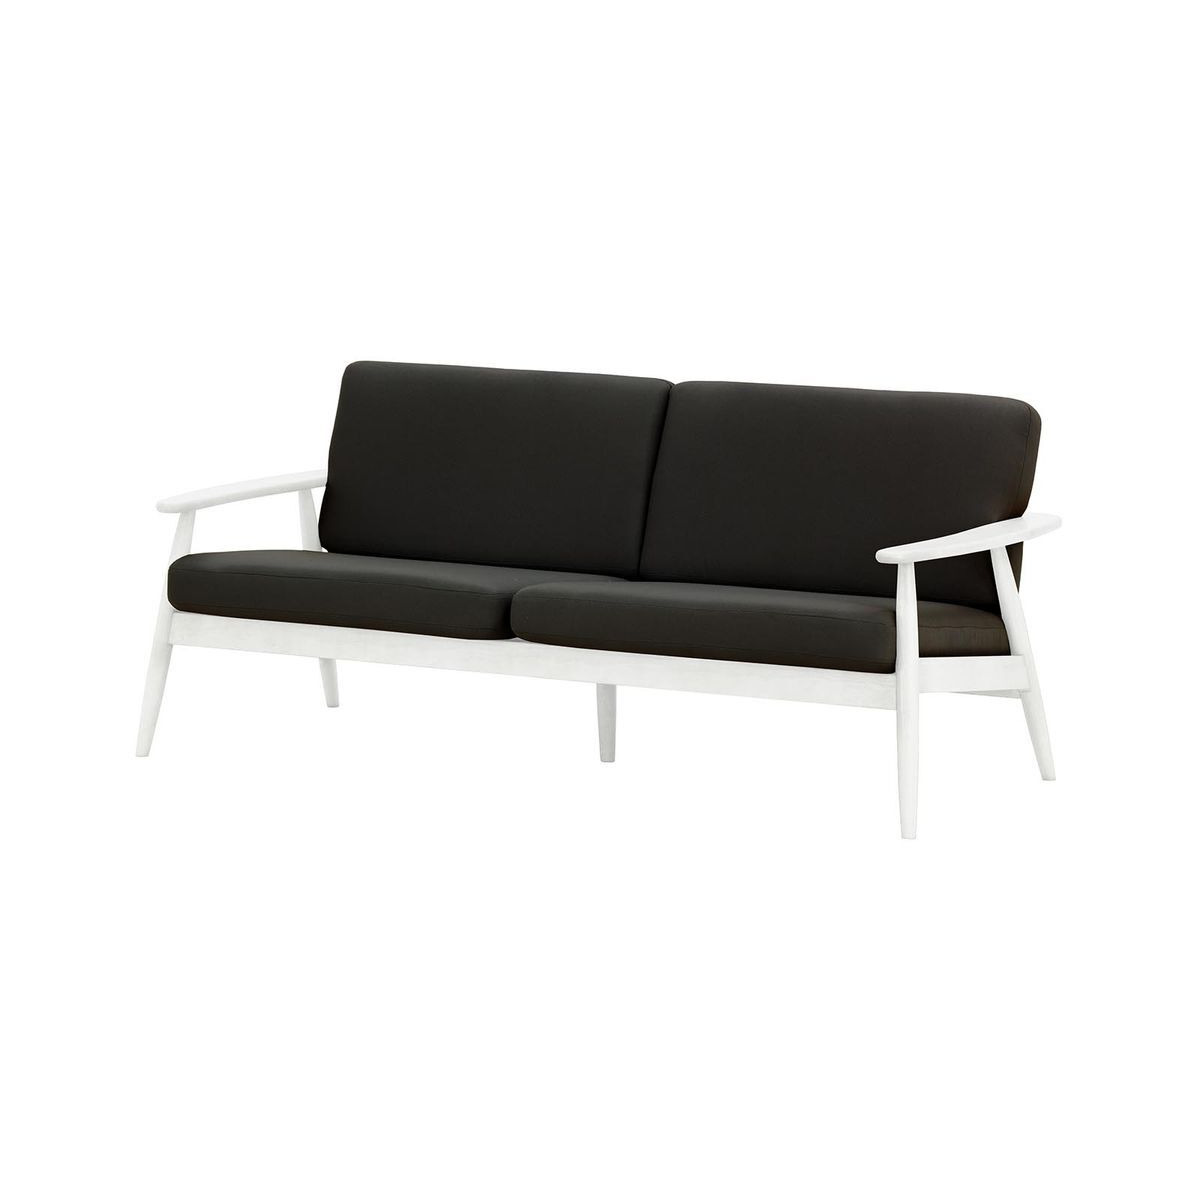 Demure Aqua 3 Seater Garden Sofa, black, Leg colour: 8035 white - image 1